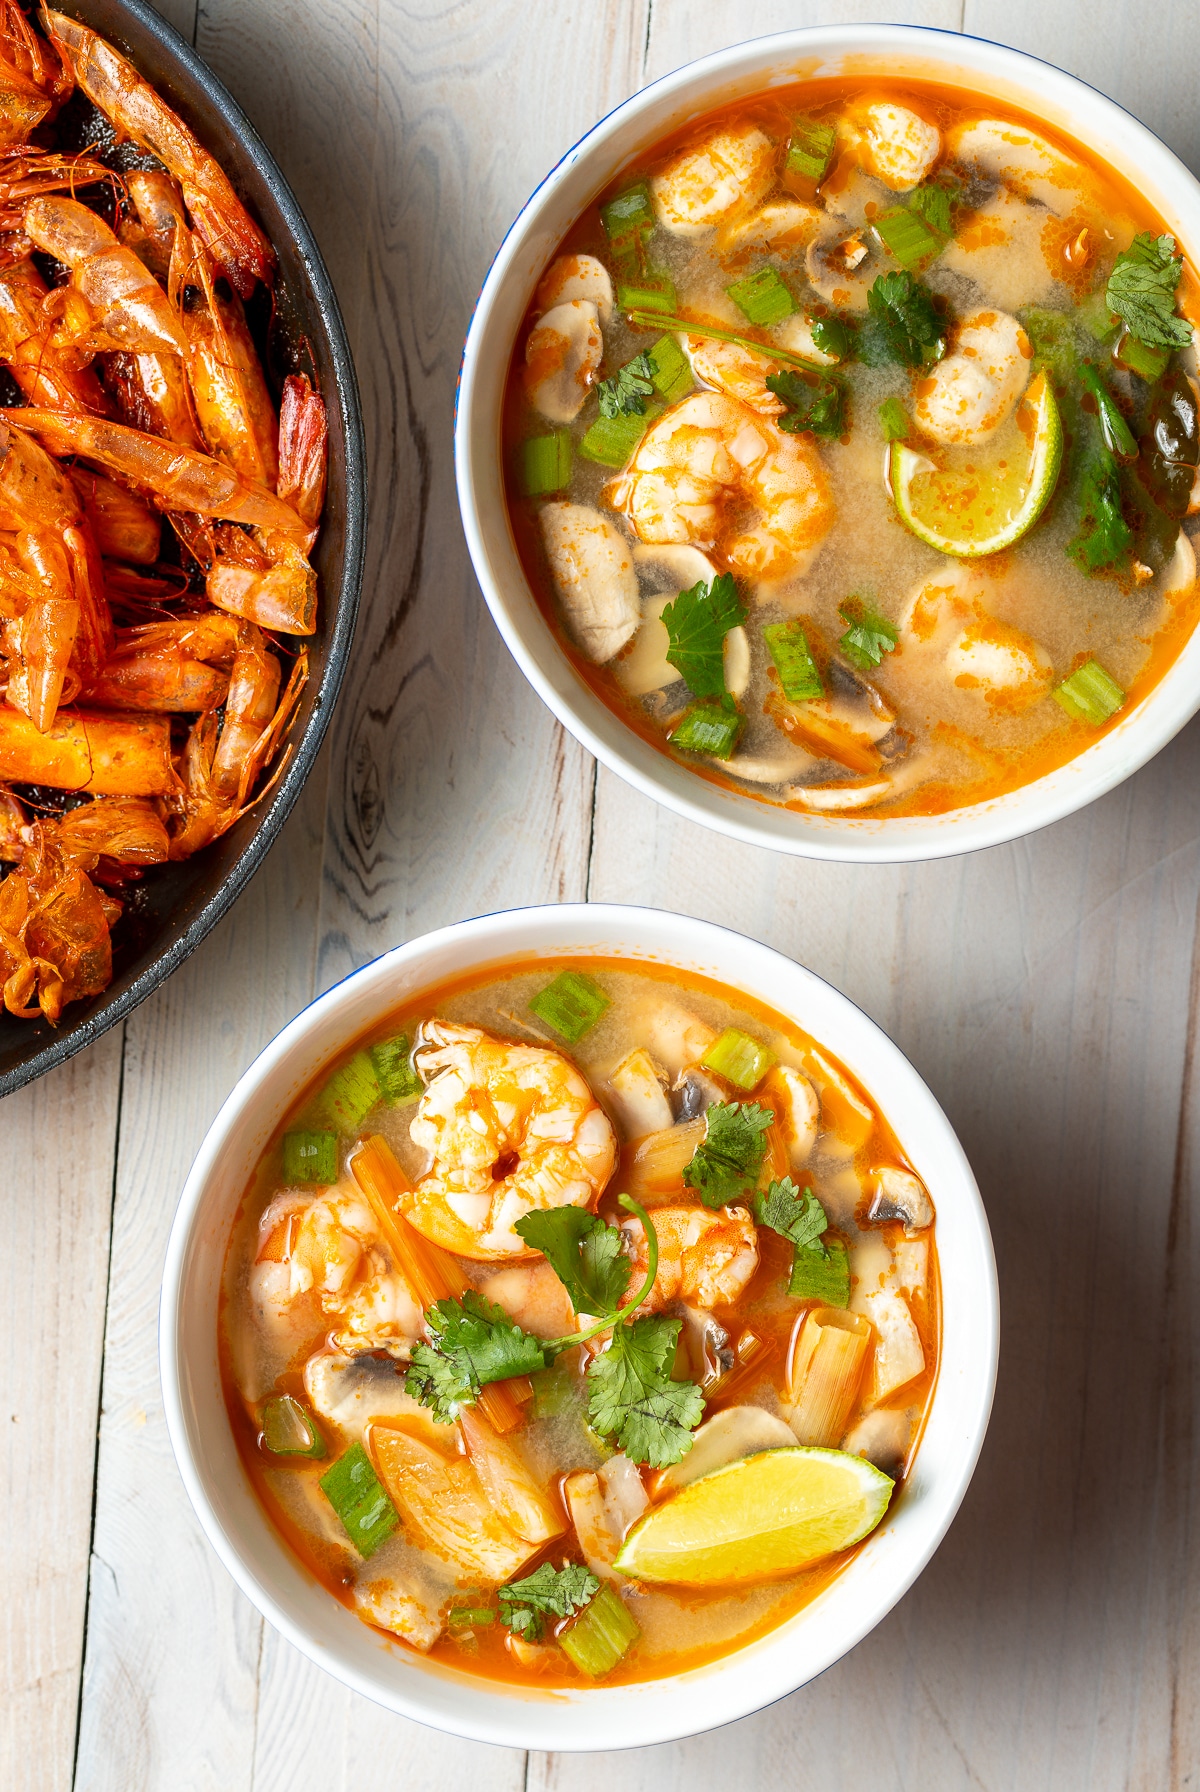 Tom Yum Hot Pot: Enjoying Spicy Thai Soup in a Pot